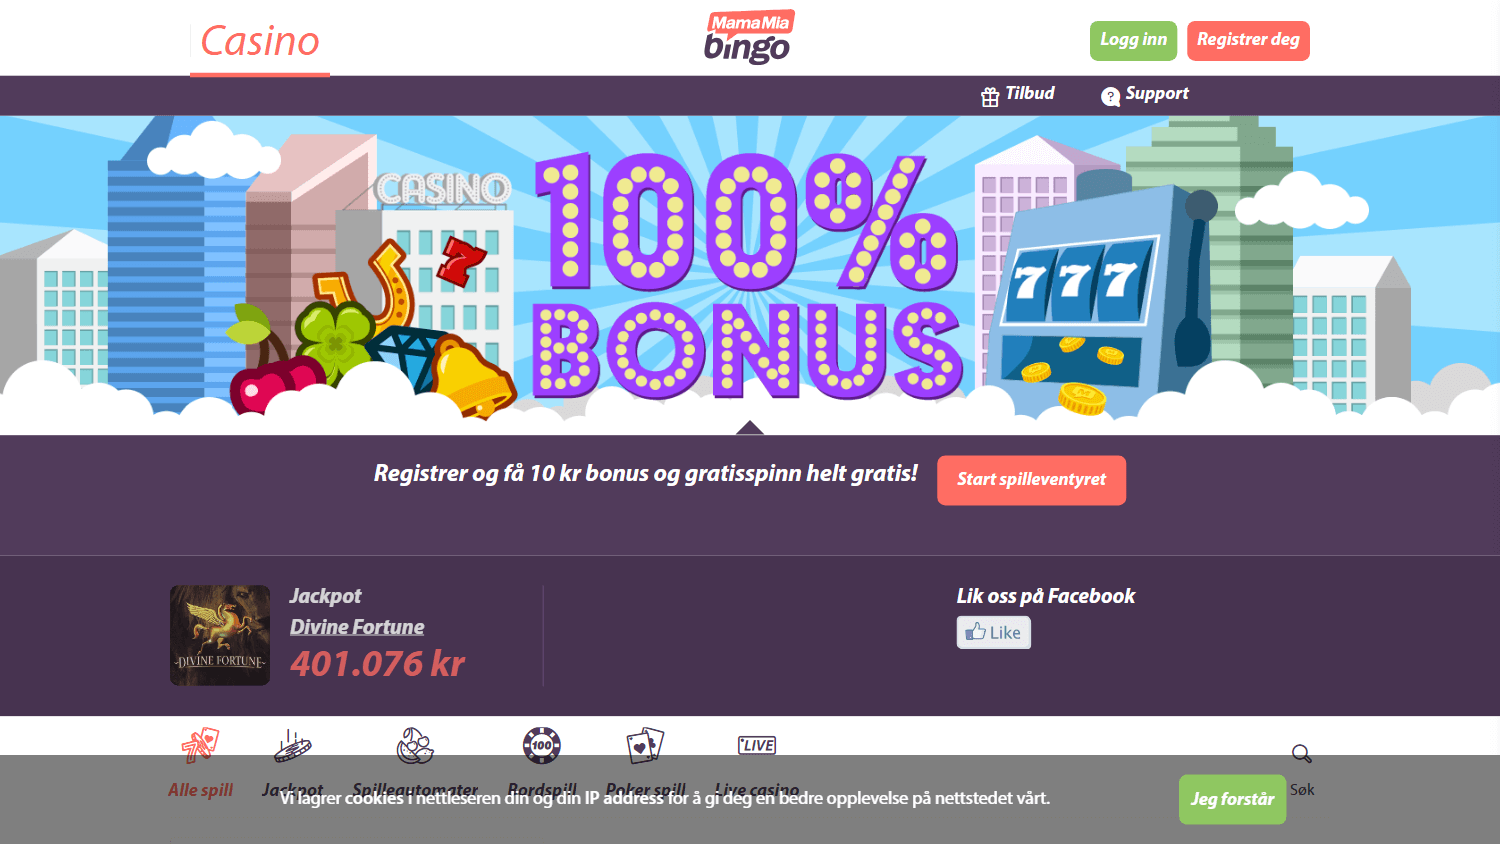 mamamia_bingo_casino_homepage_desktop